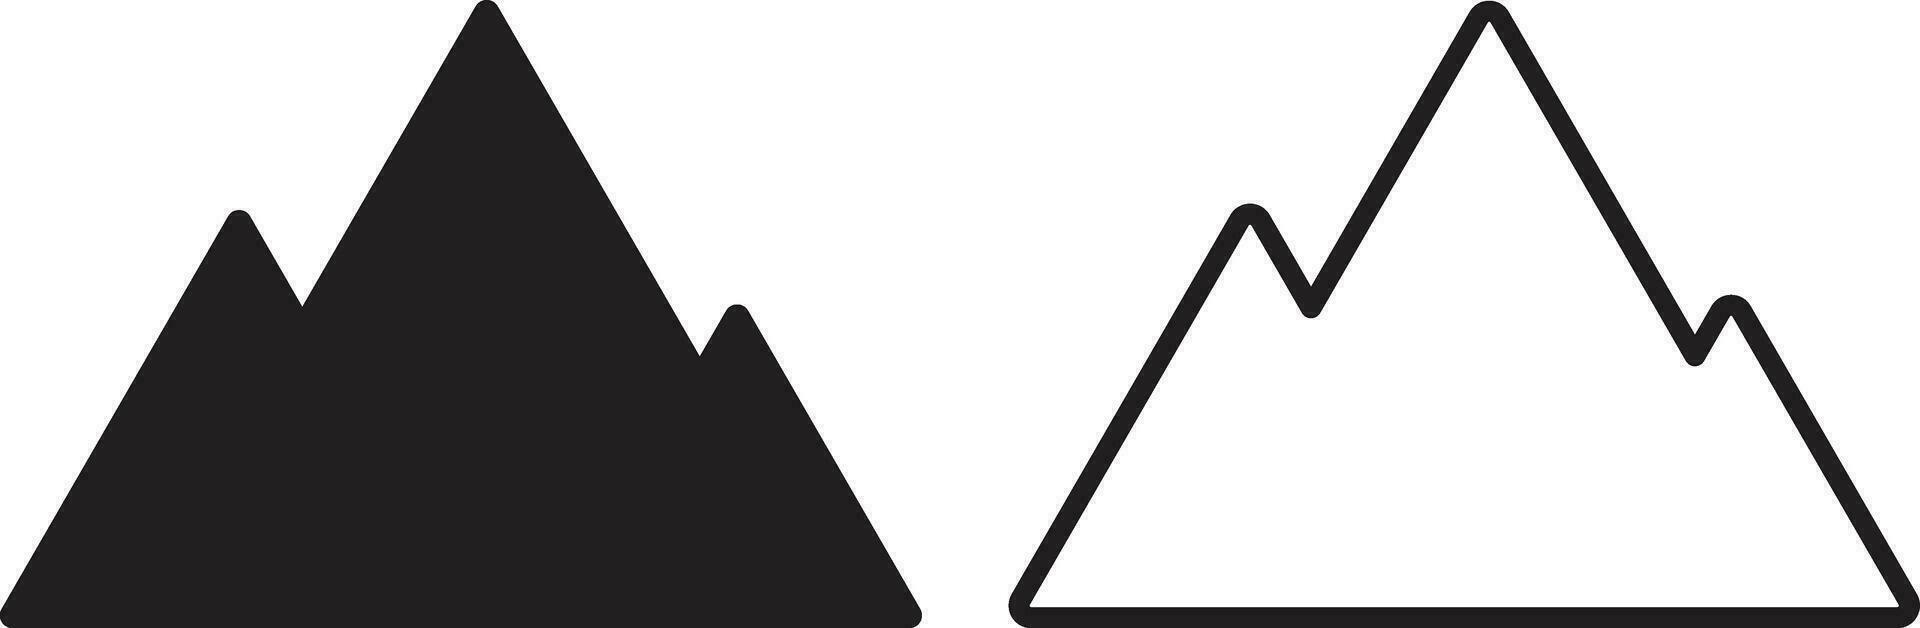 montaña icono conjunto en dos estilos aislado en blanco antecedentes vector